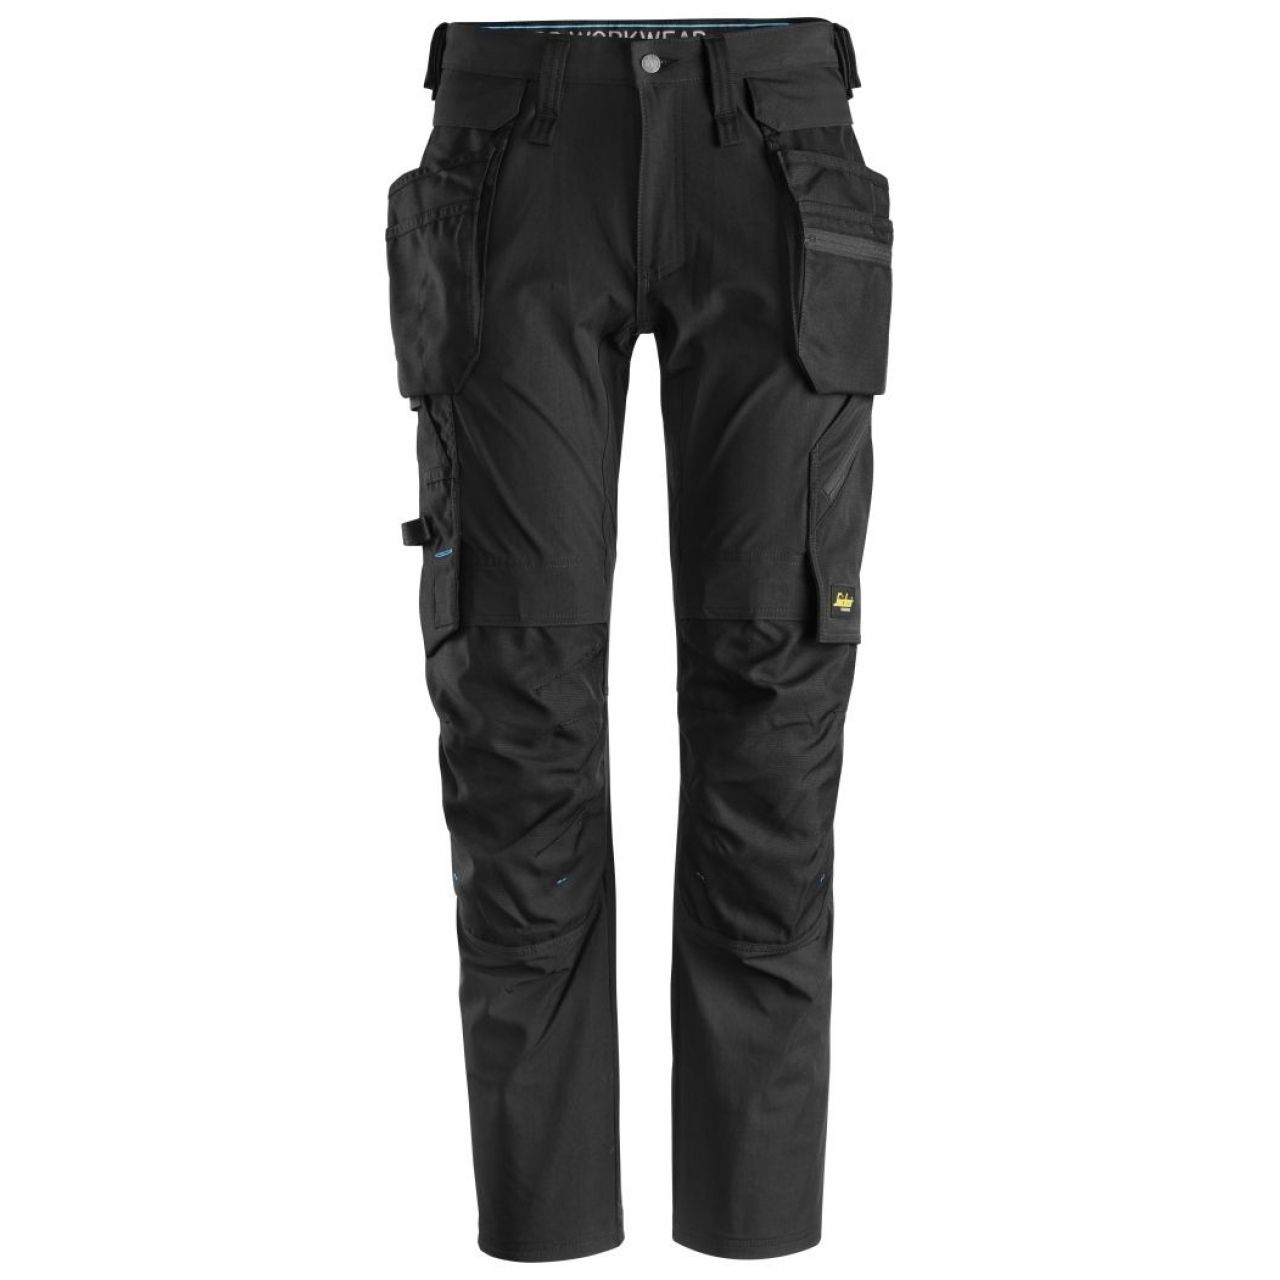 Pantalon + bolsillos flotantes desmontables LiteWork negro talla 192